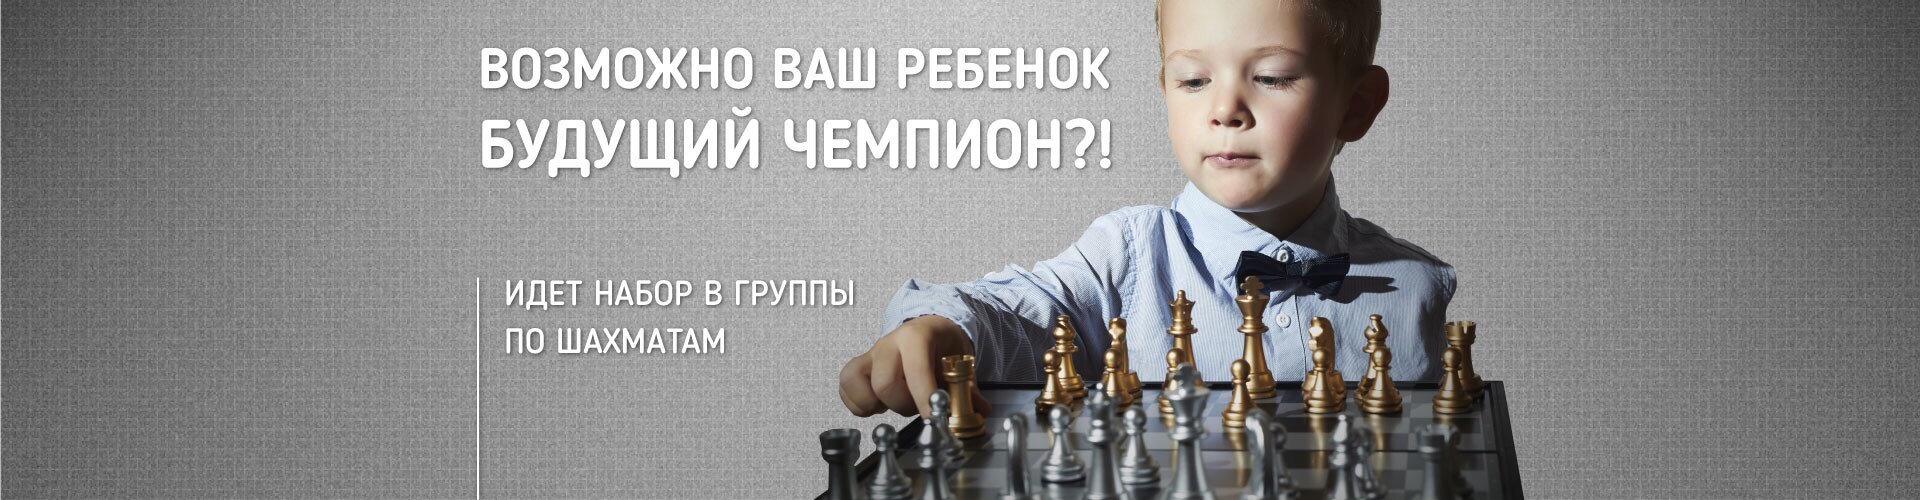 Детская шахматная школа Магистр